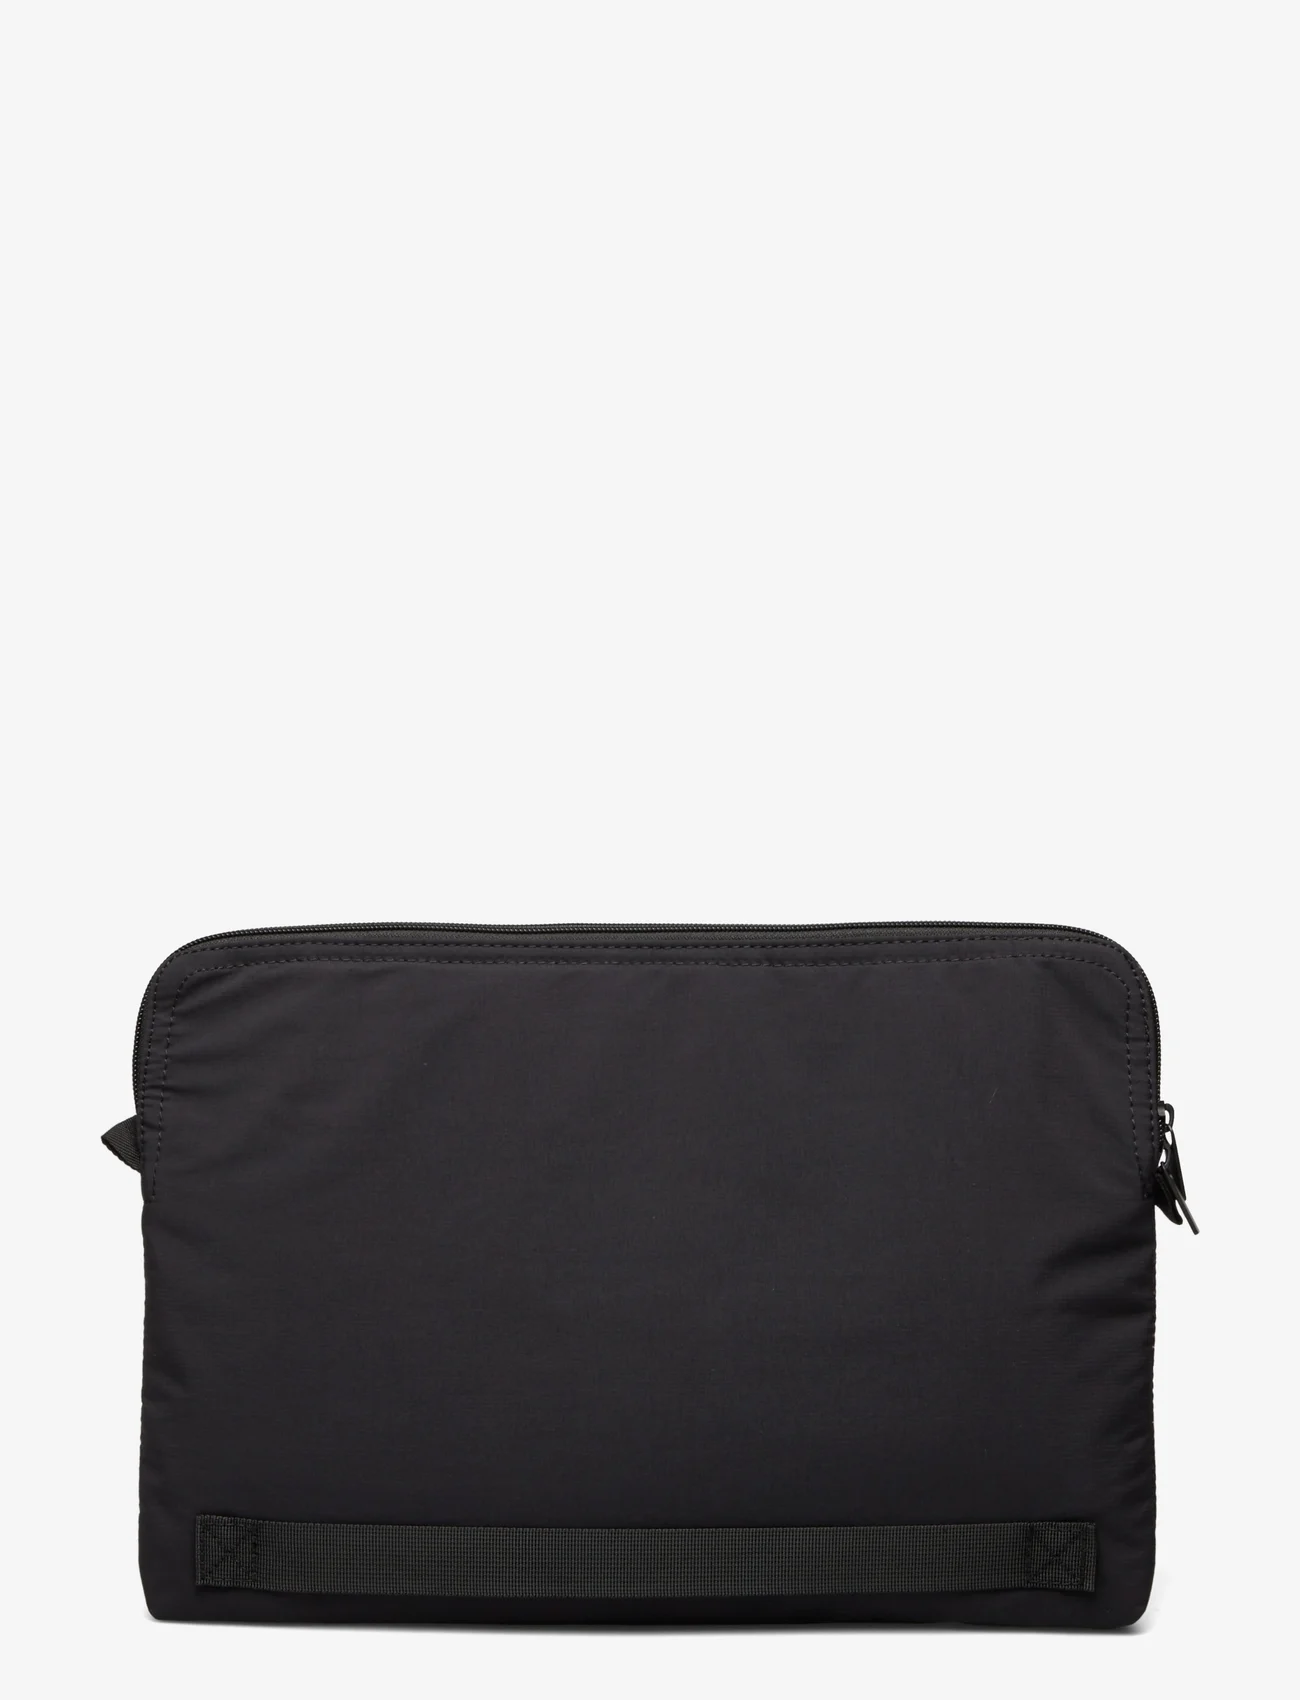 Garment Project - Laptop Sleeve 13/15' - Black - torby komputerowe - black - 1